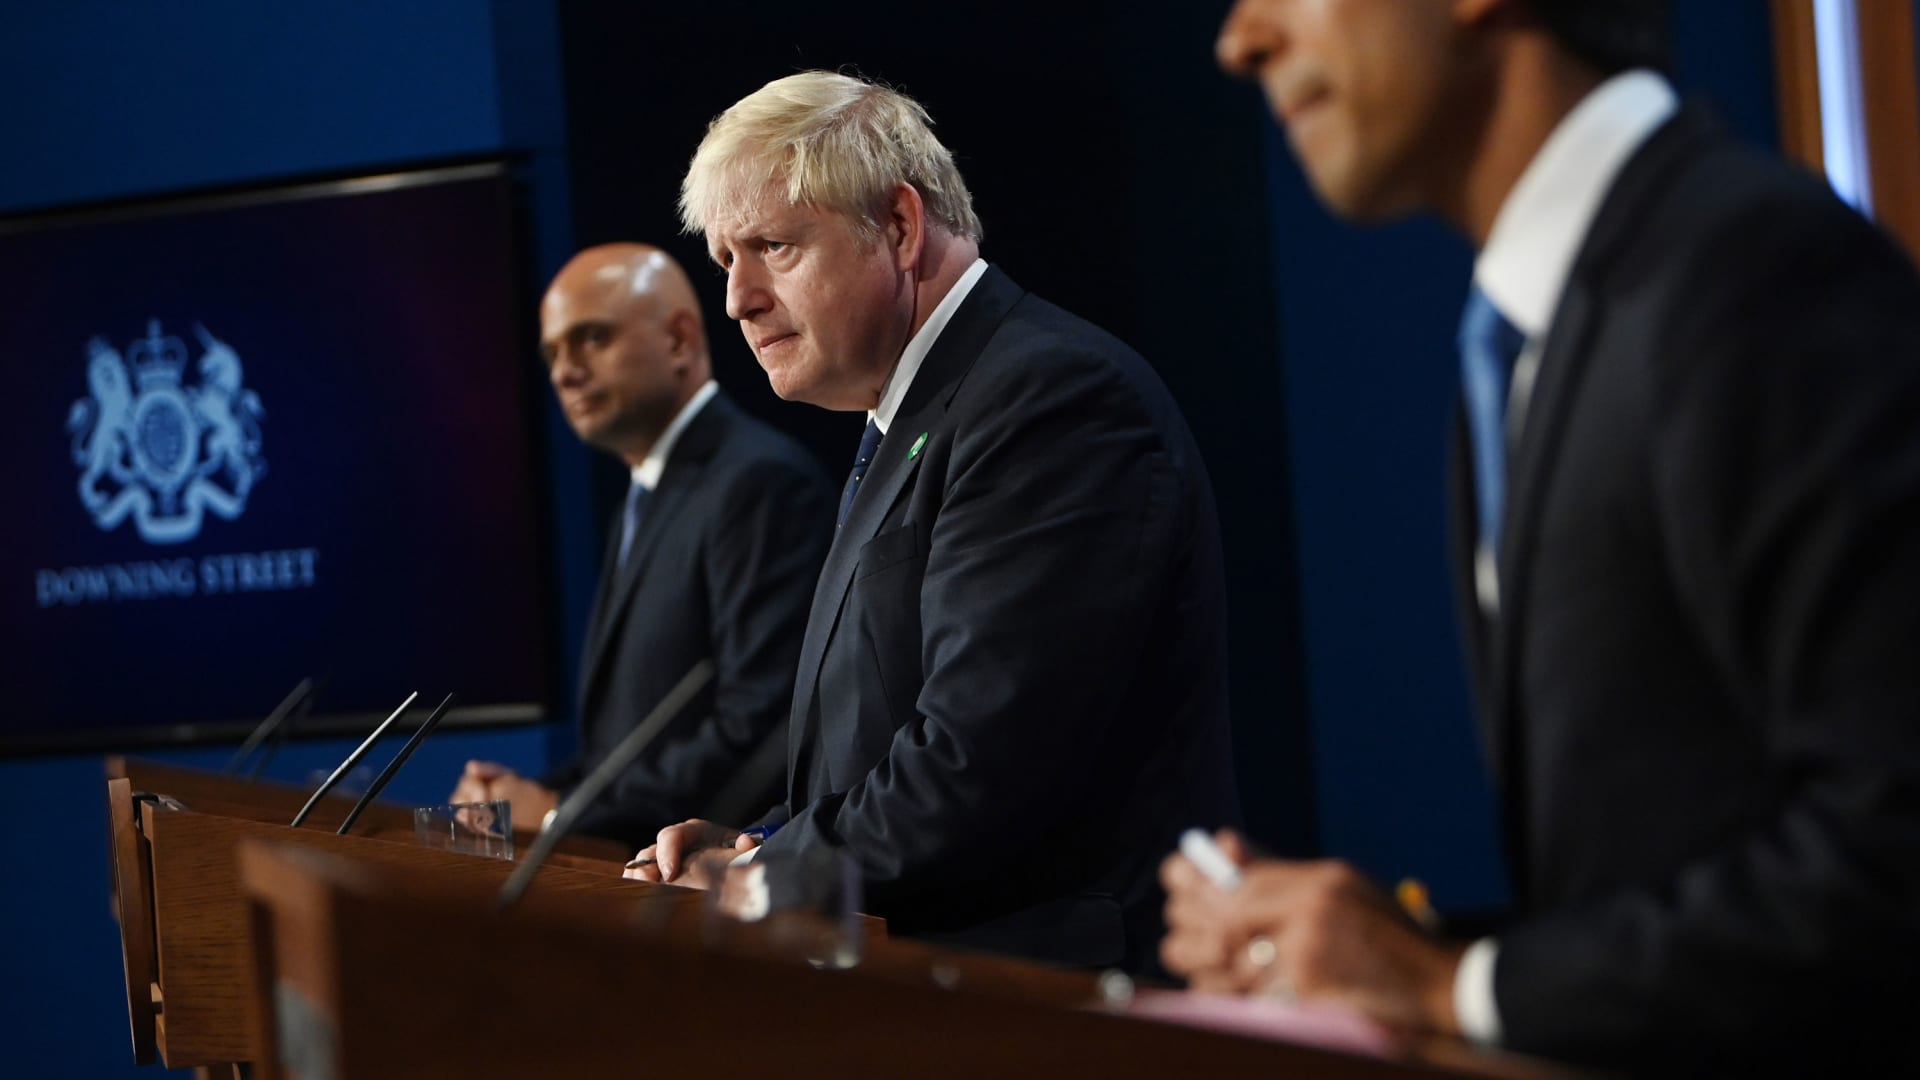 Three senior UK officials resign in protest over Prime Minister Boris Johnson’s leadership